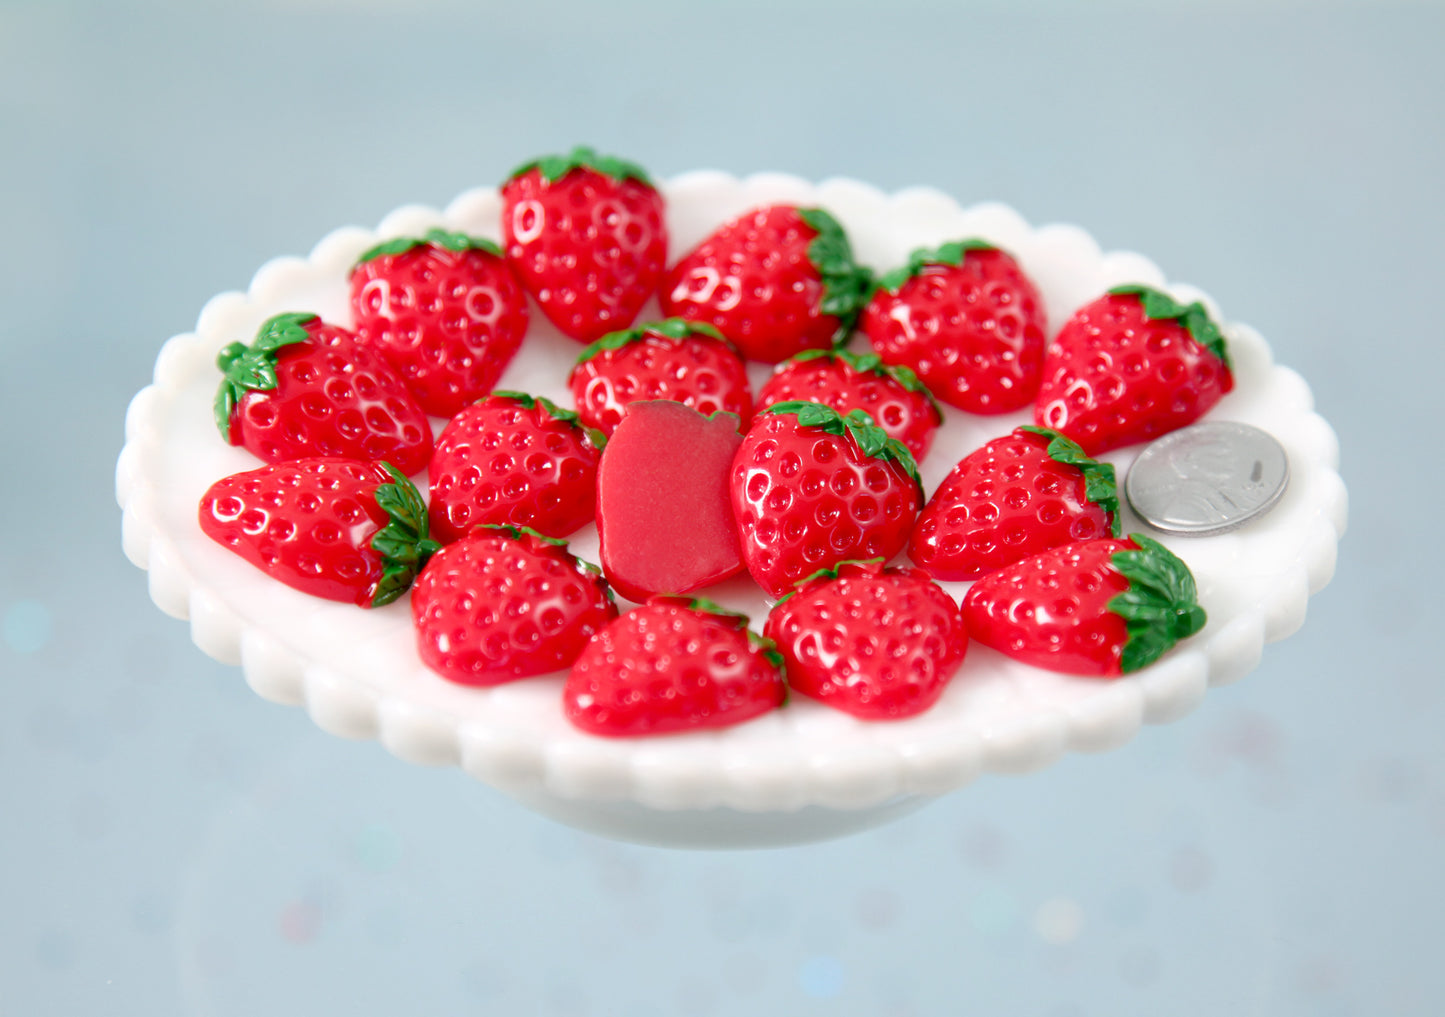 Strawberry Cabochons - 28mm Realistic Strawberry Flat backs Acrylic or Resin Flatback Cabochons - 6 pc set